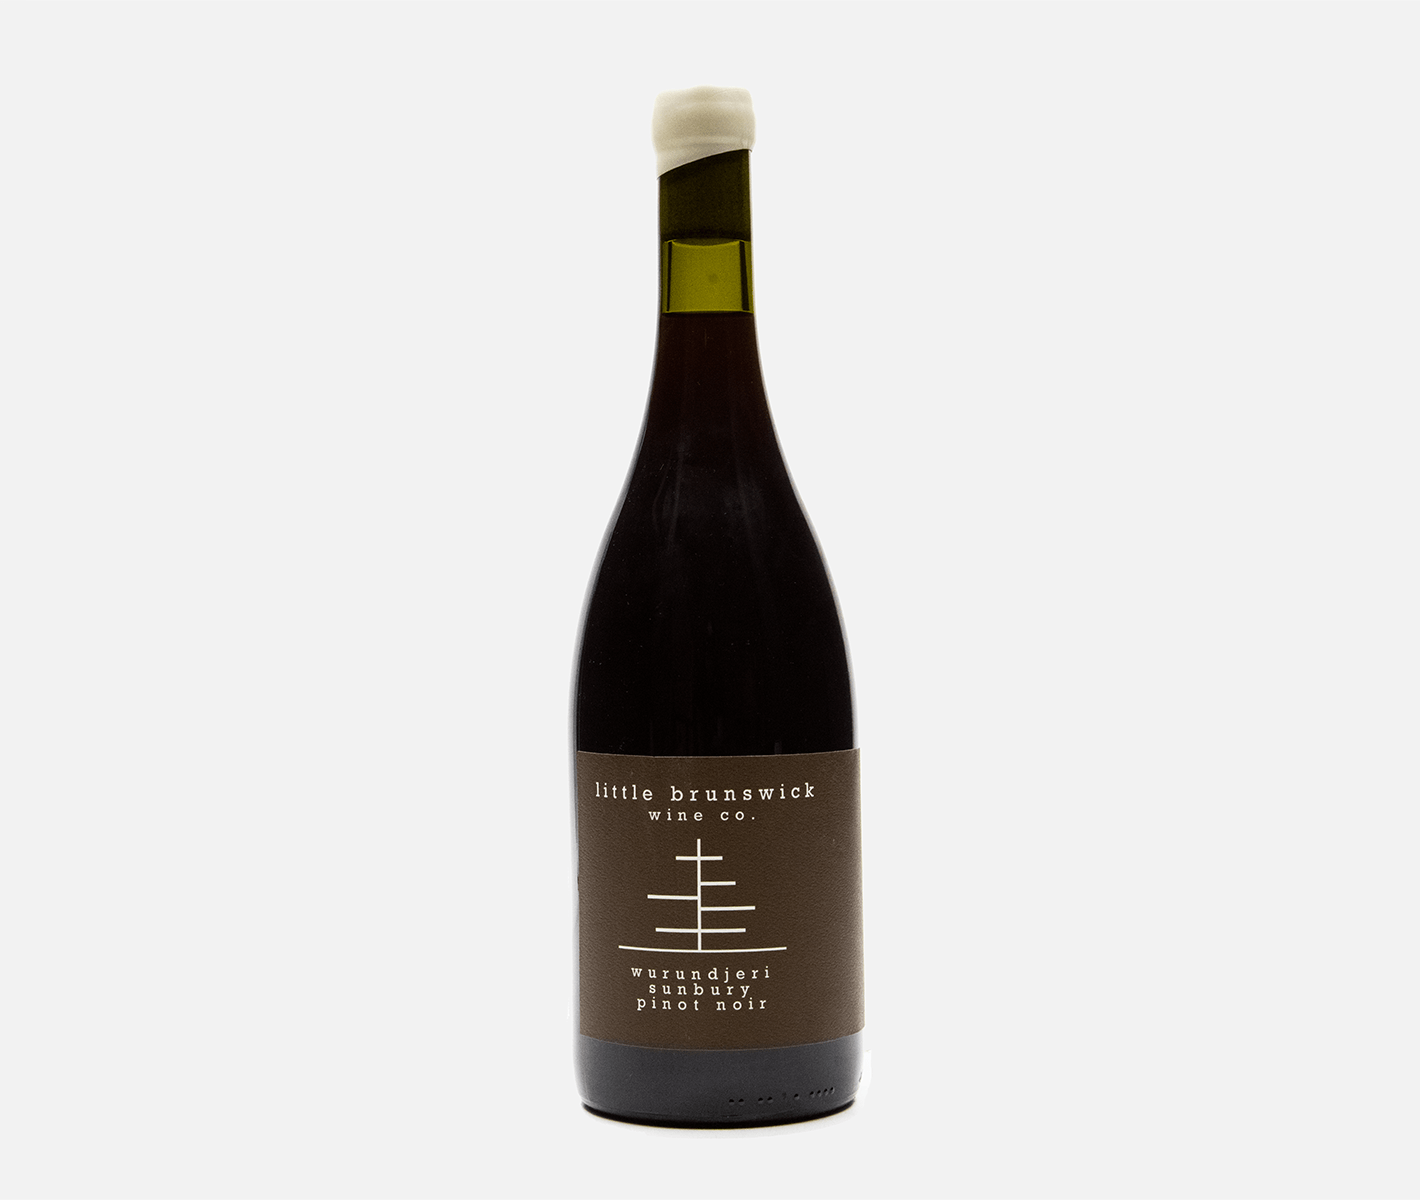 2020 Little Brunswick Wine Co. Wurundjeri Sunbury Pinot Noir - DRNKS